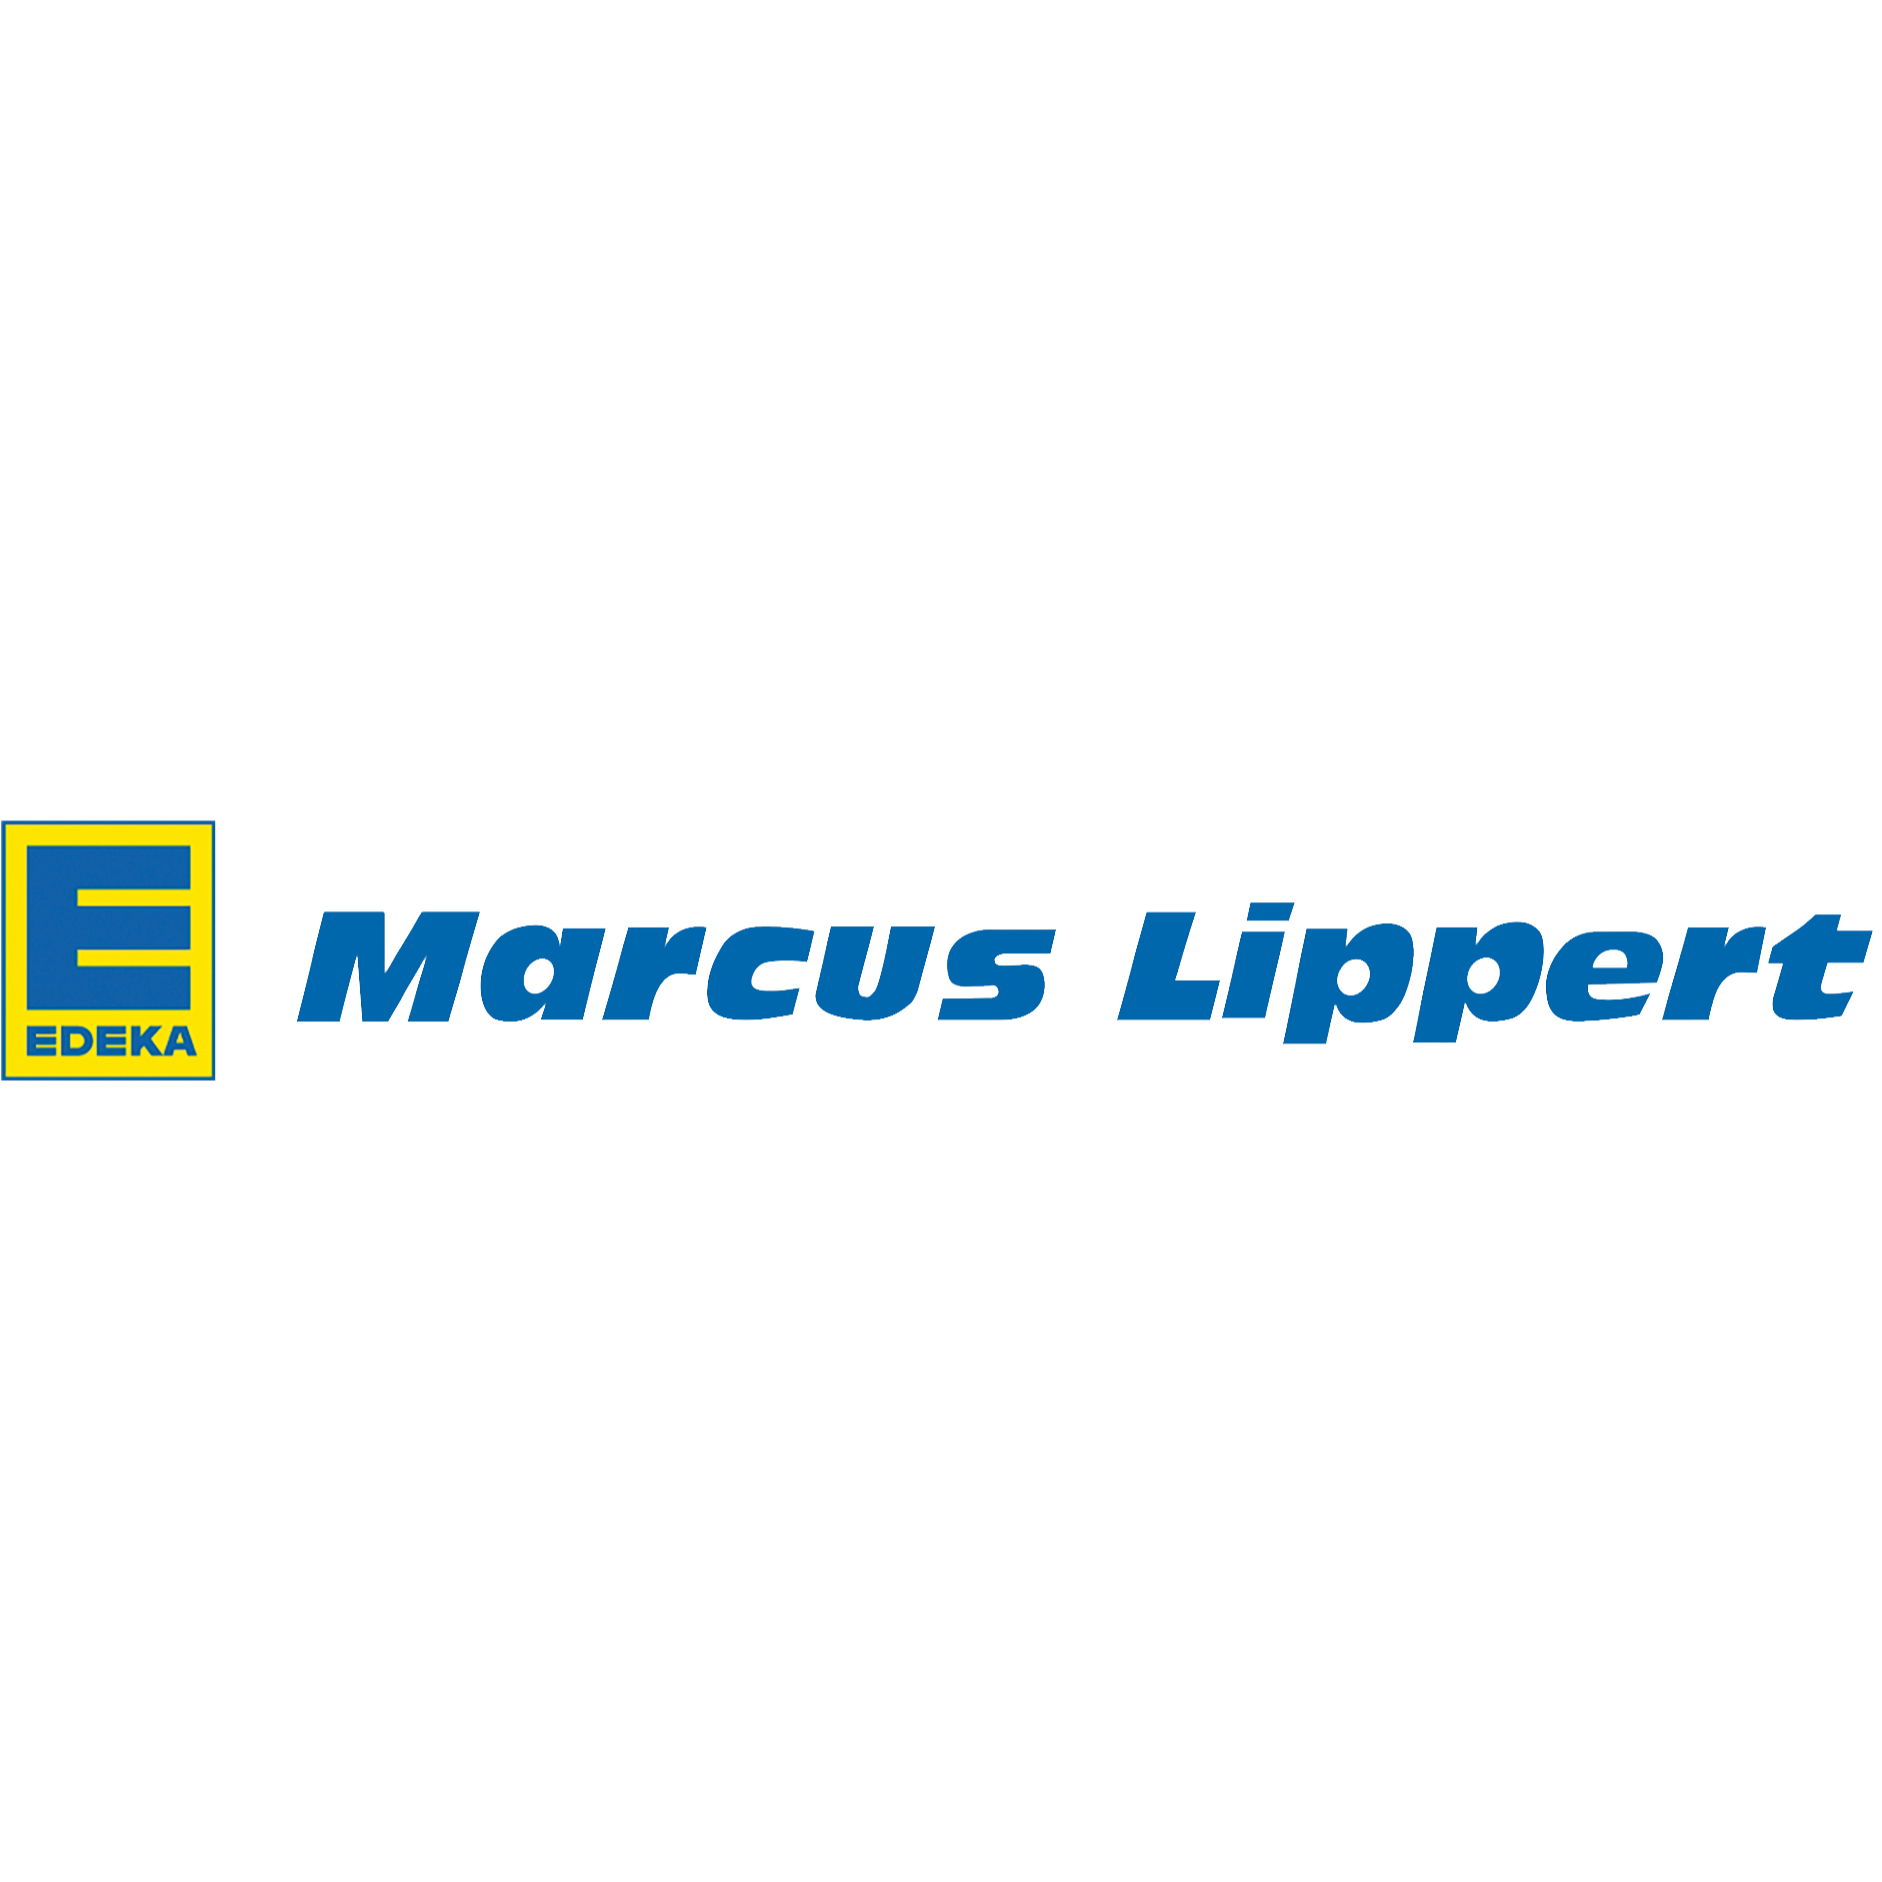 Edeka Team Marcus Lippert in Geesthacht  